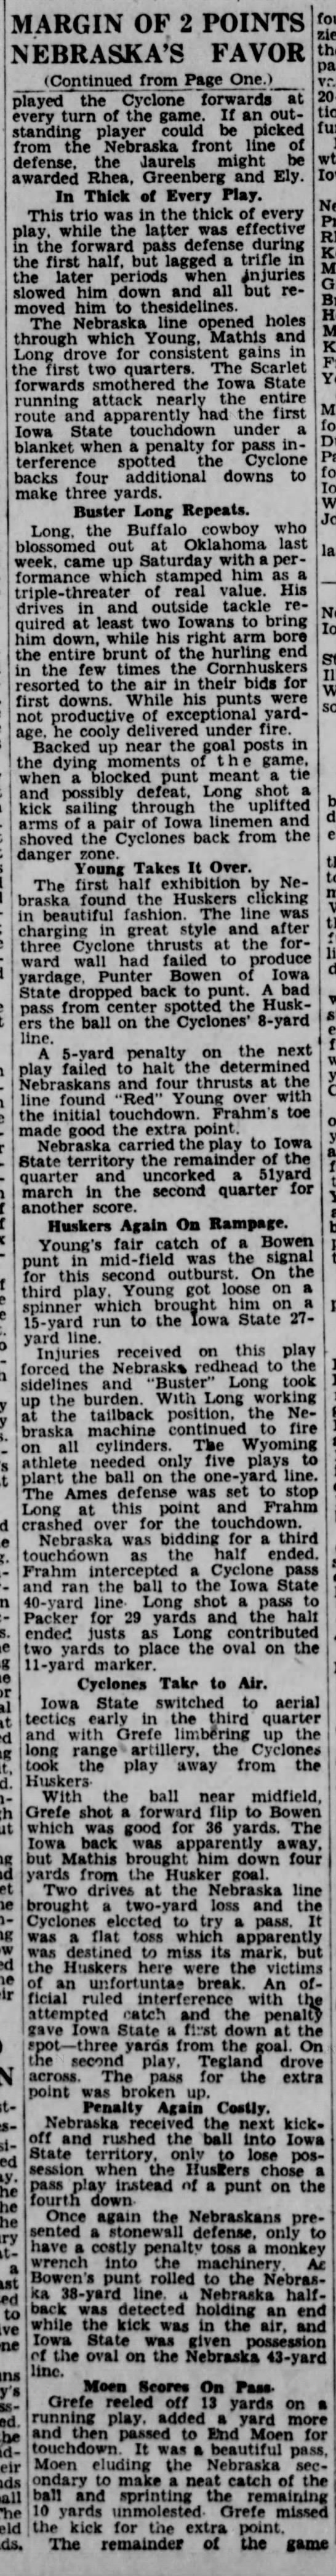 1930 Nebraska-Iowa State football, part 3 - 